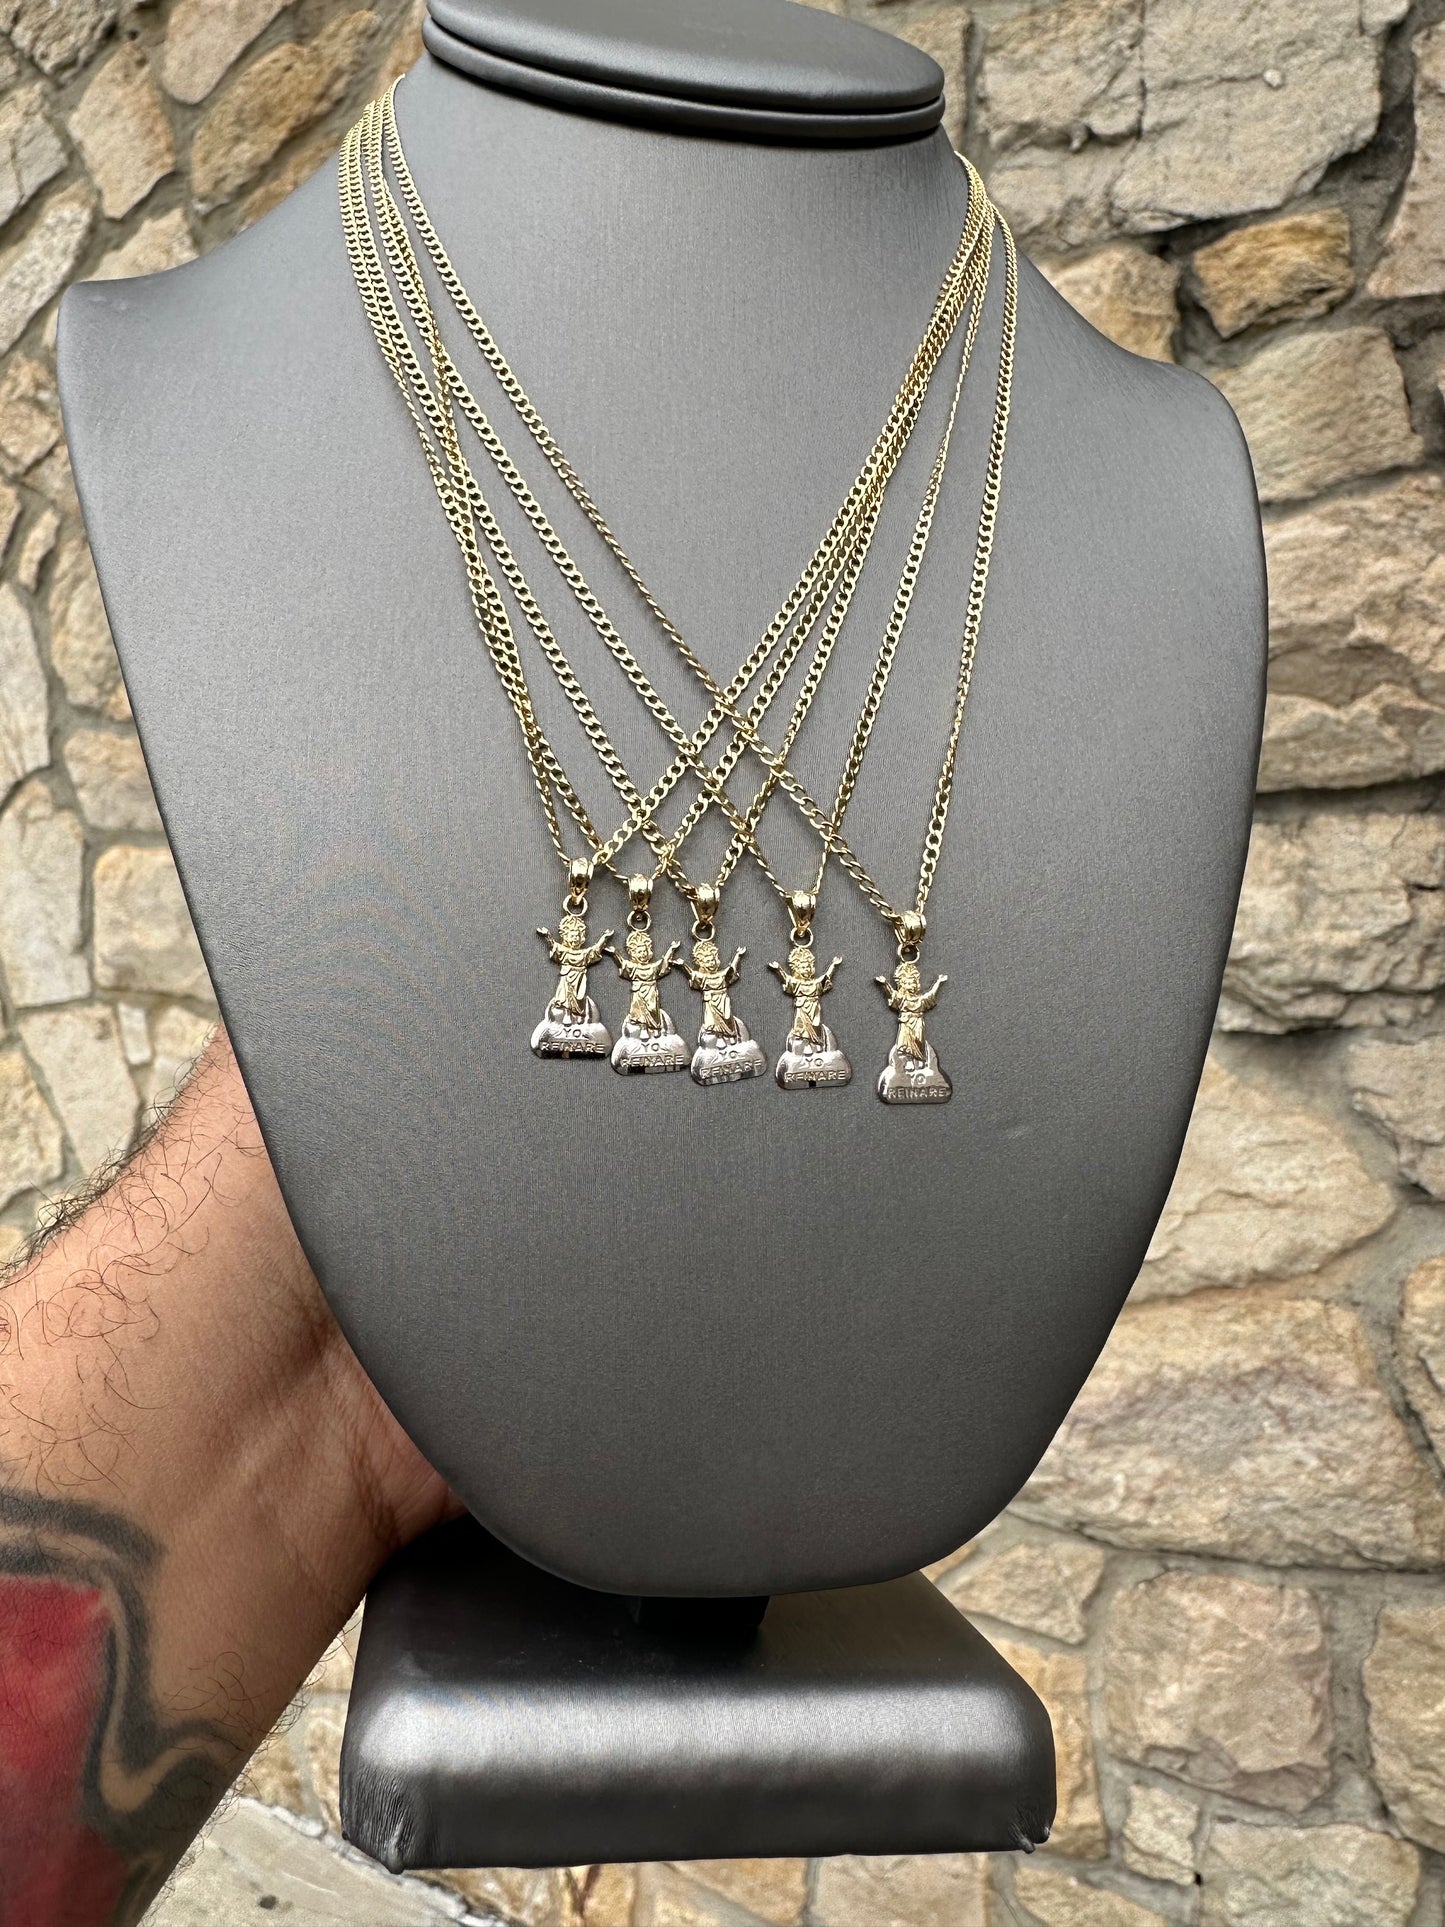 14k Divino niño pendant with cuban chain